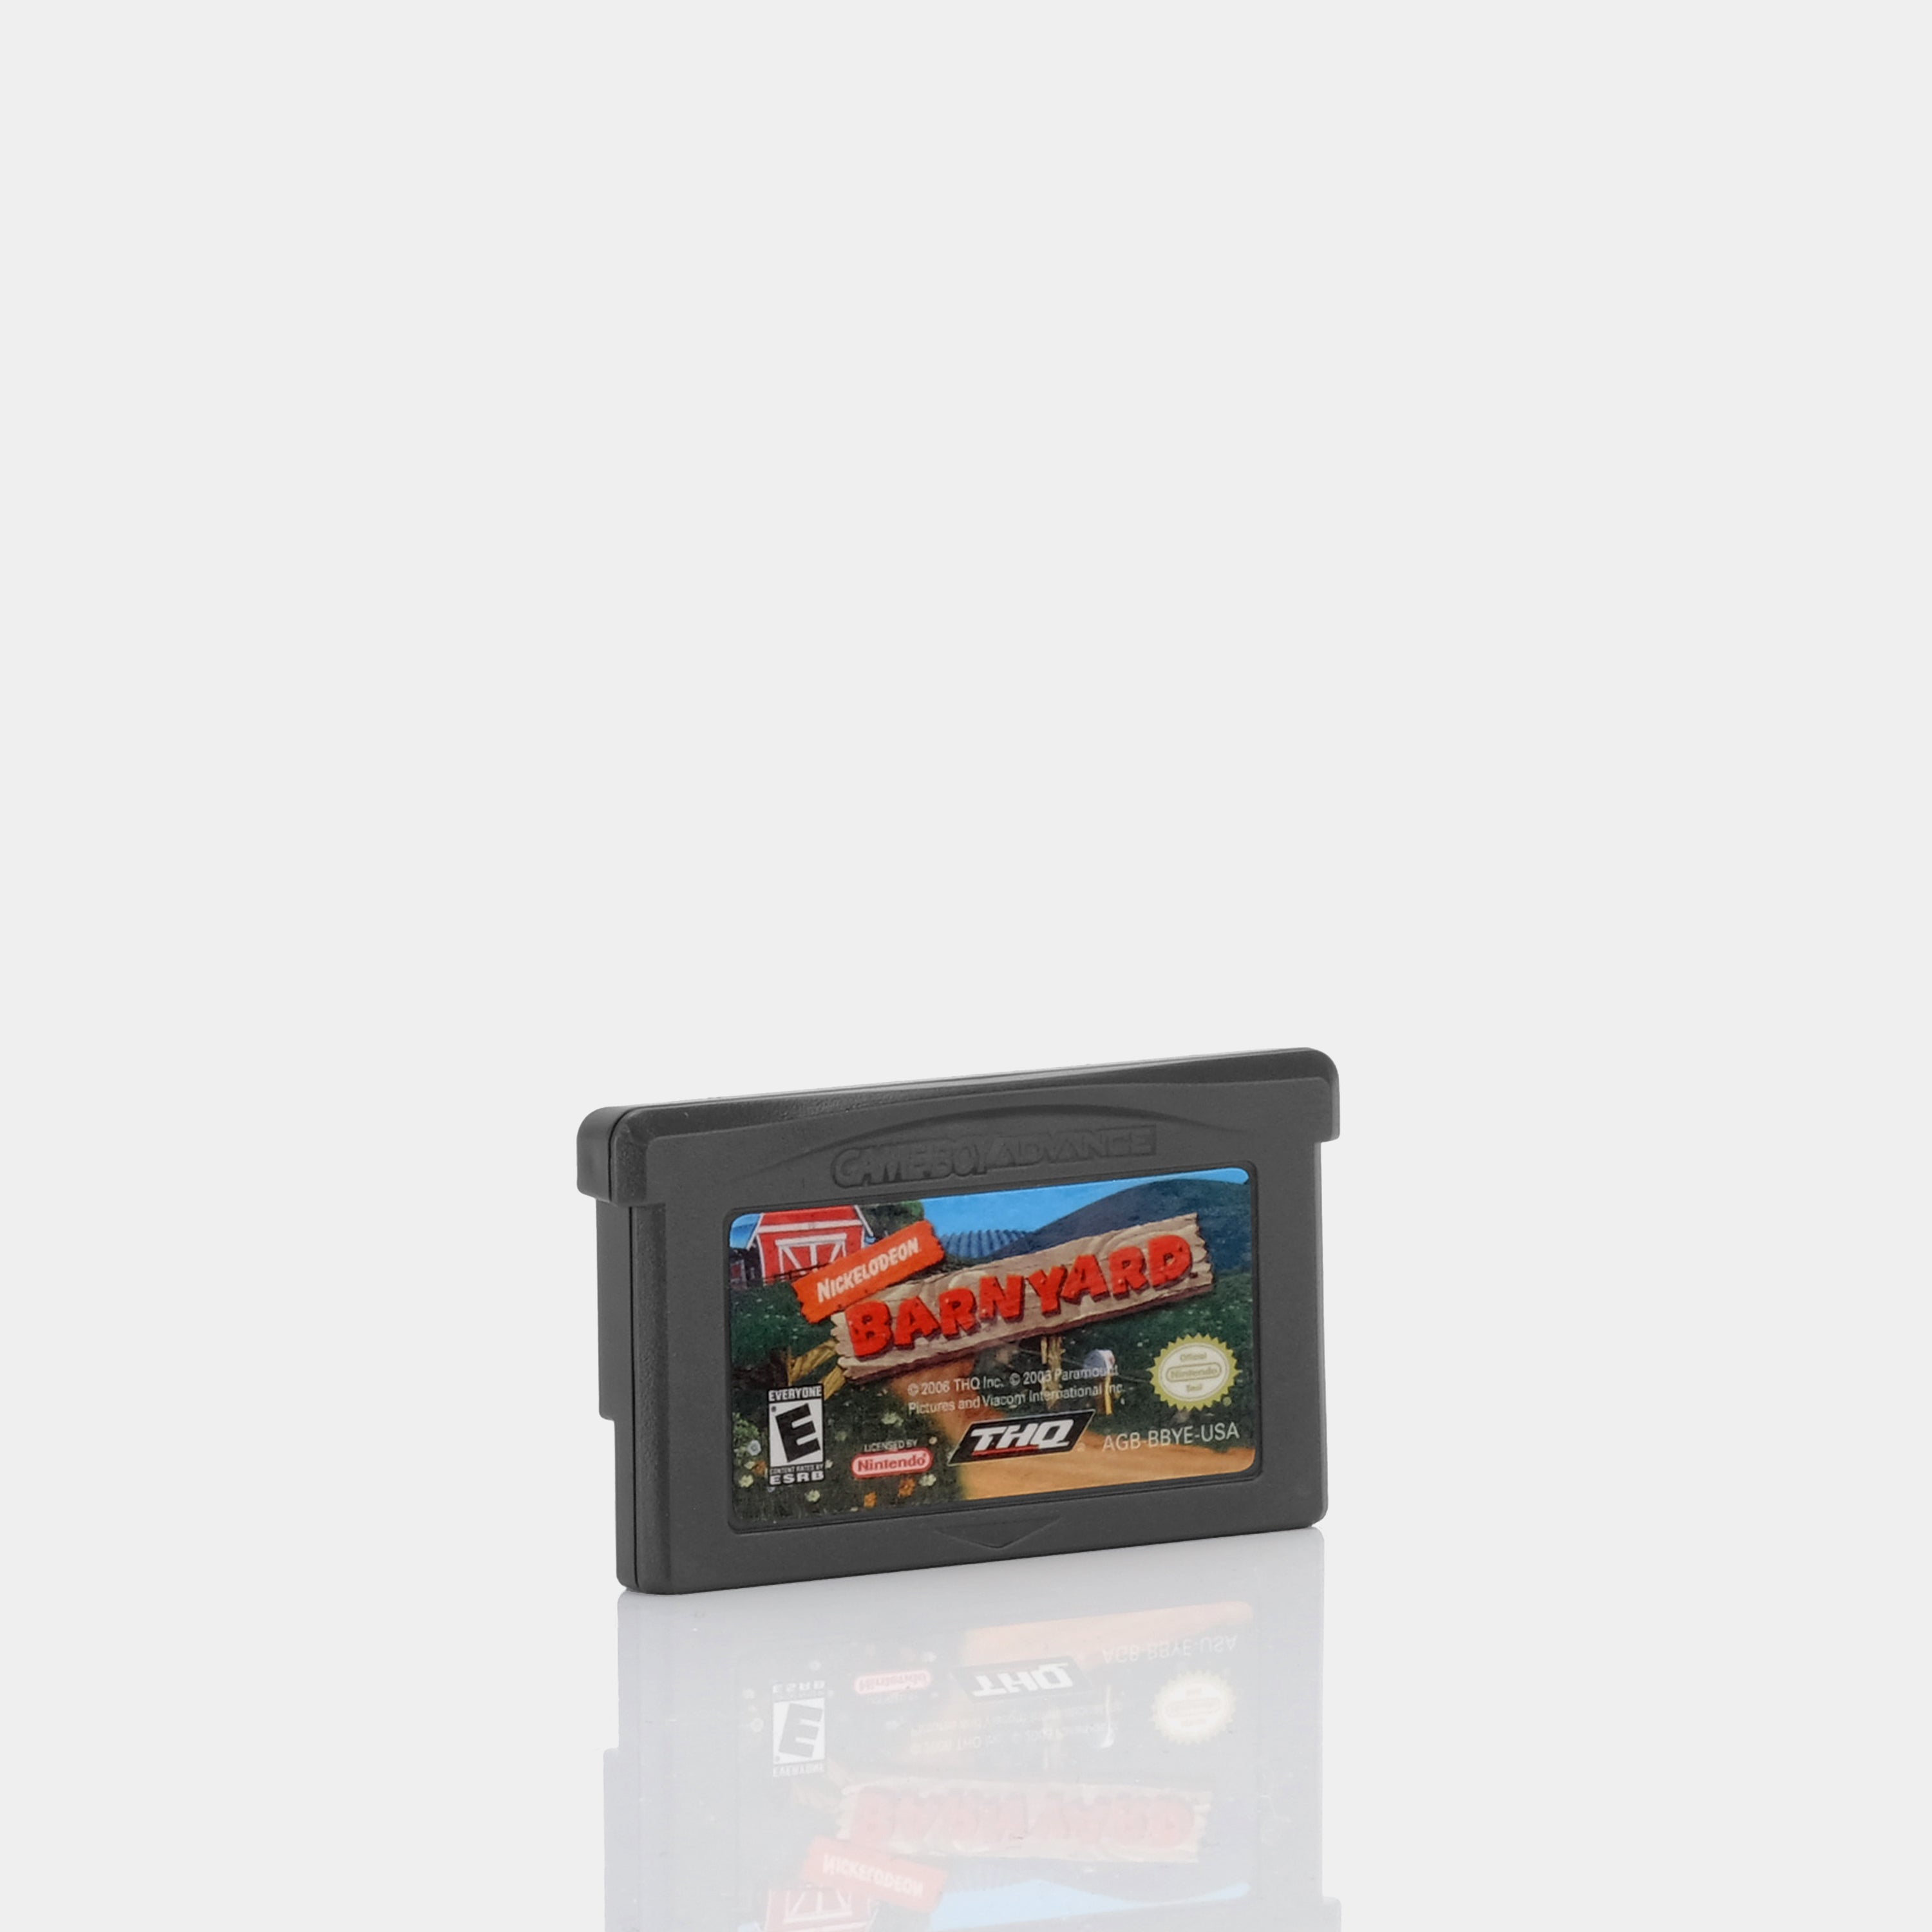 Nickelodeon Barnyard Game Boy Advance Game